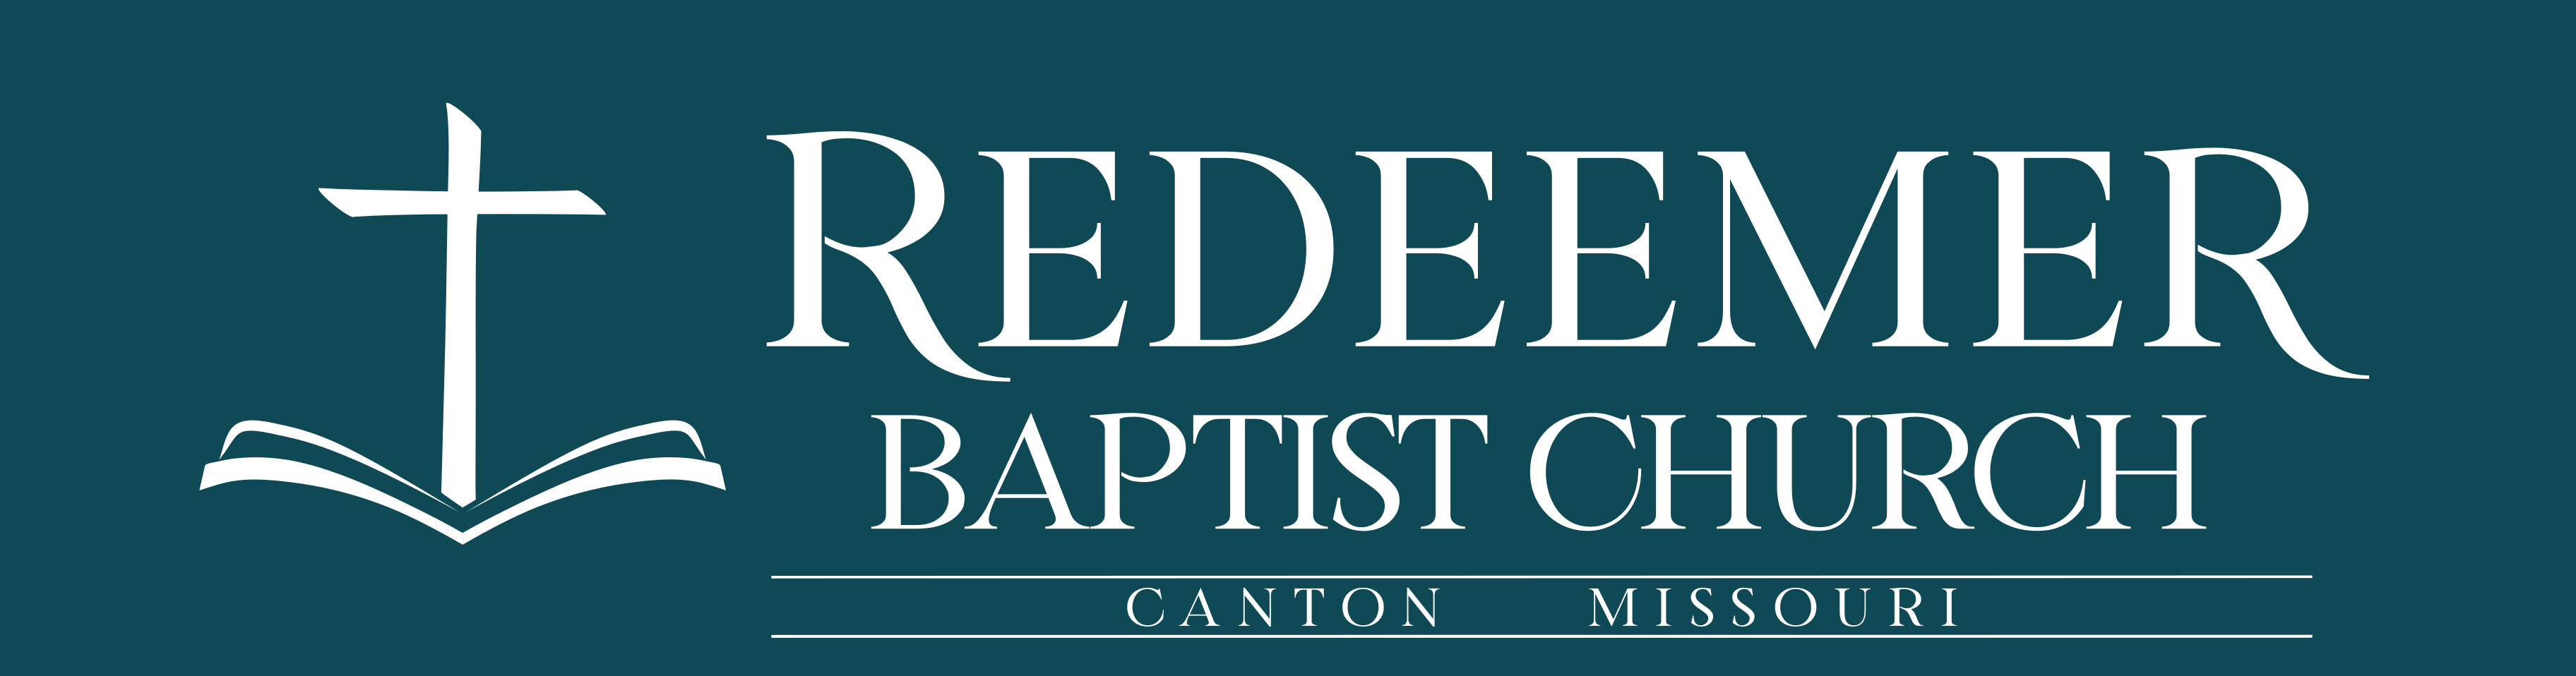 Redeemer Baptist Church in Canton, Missouri